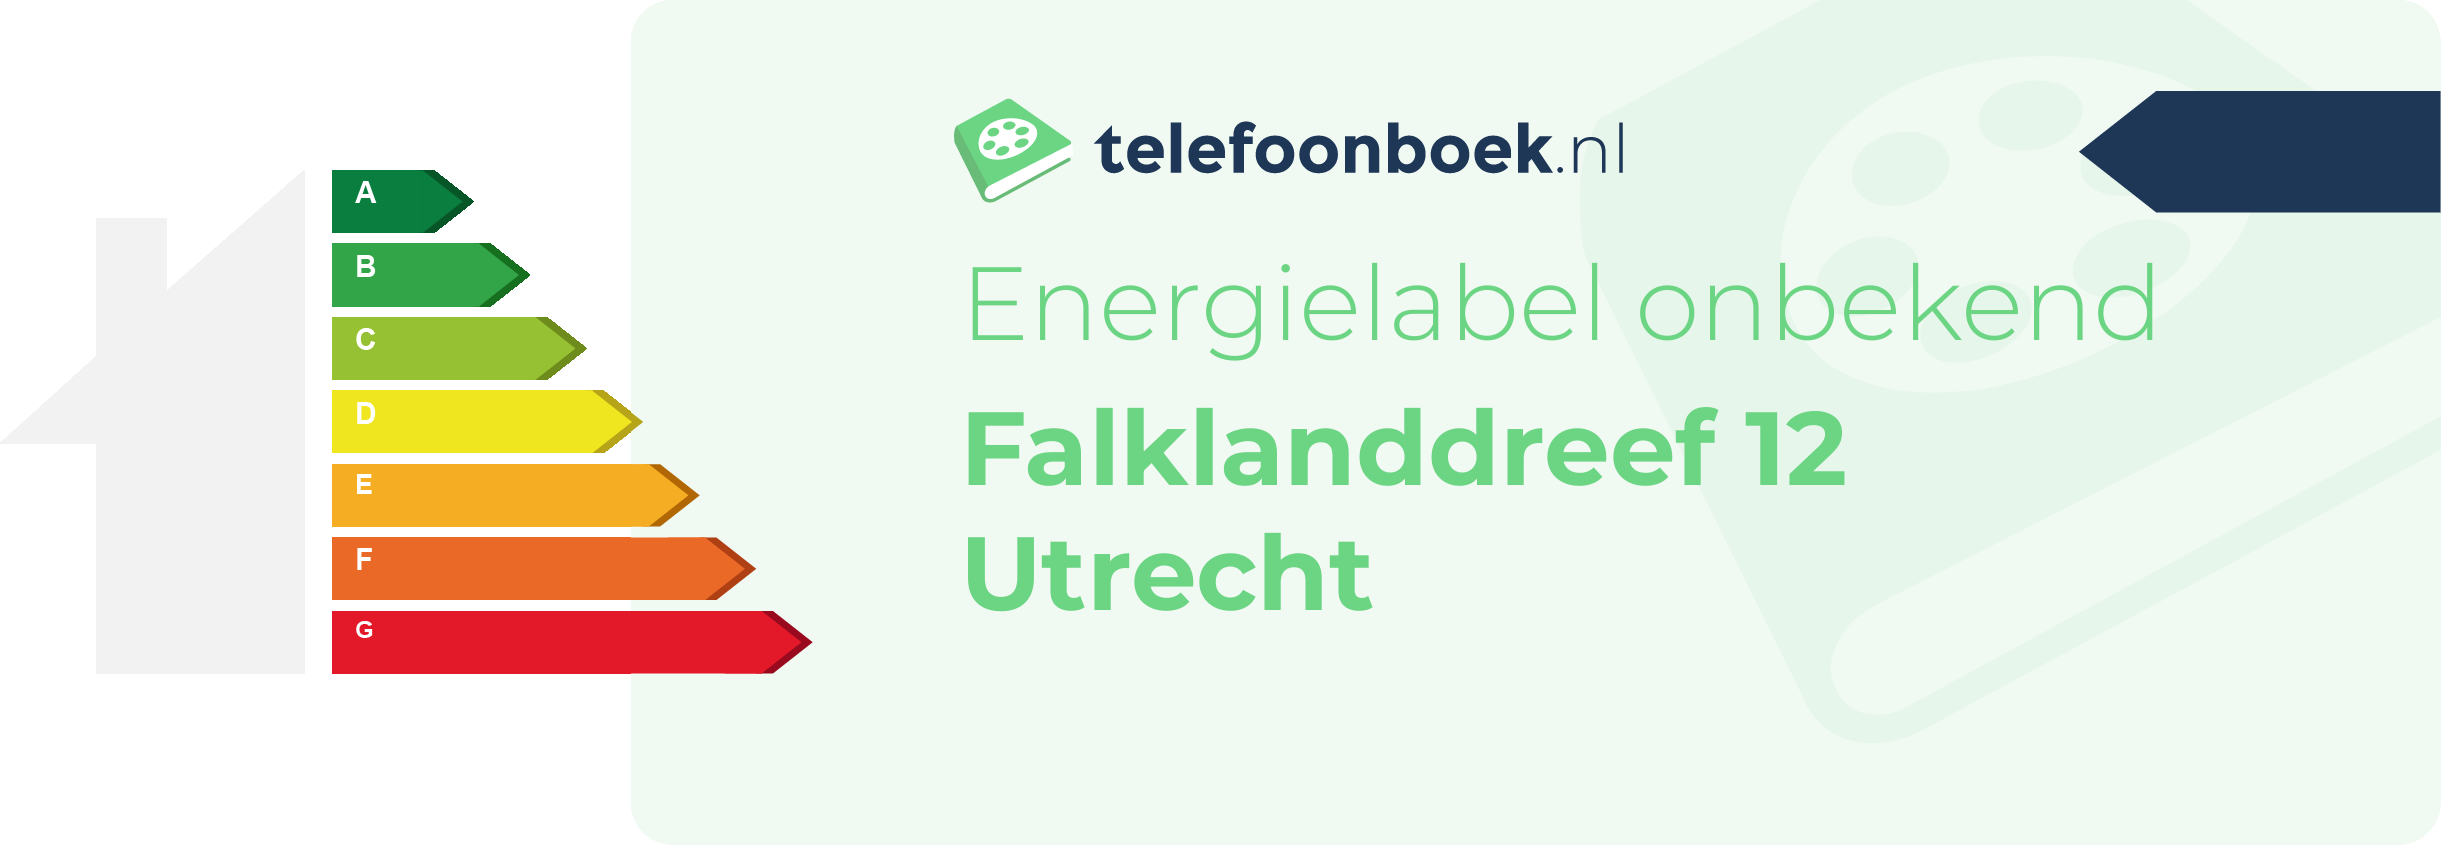 Energielabel Falklanddreef 12 Utrecht